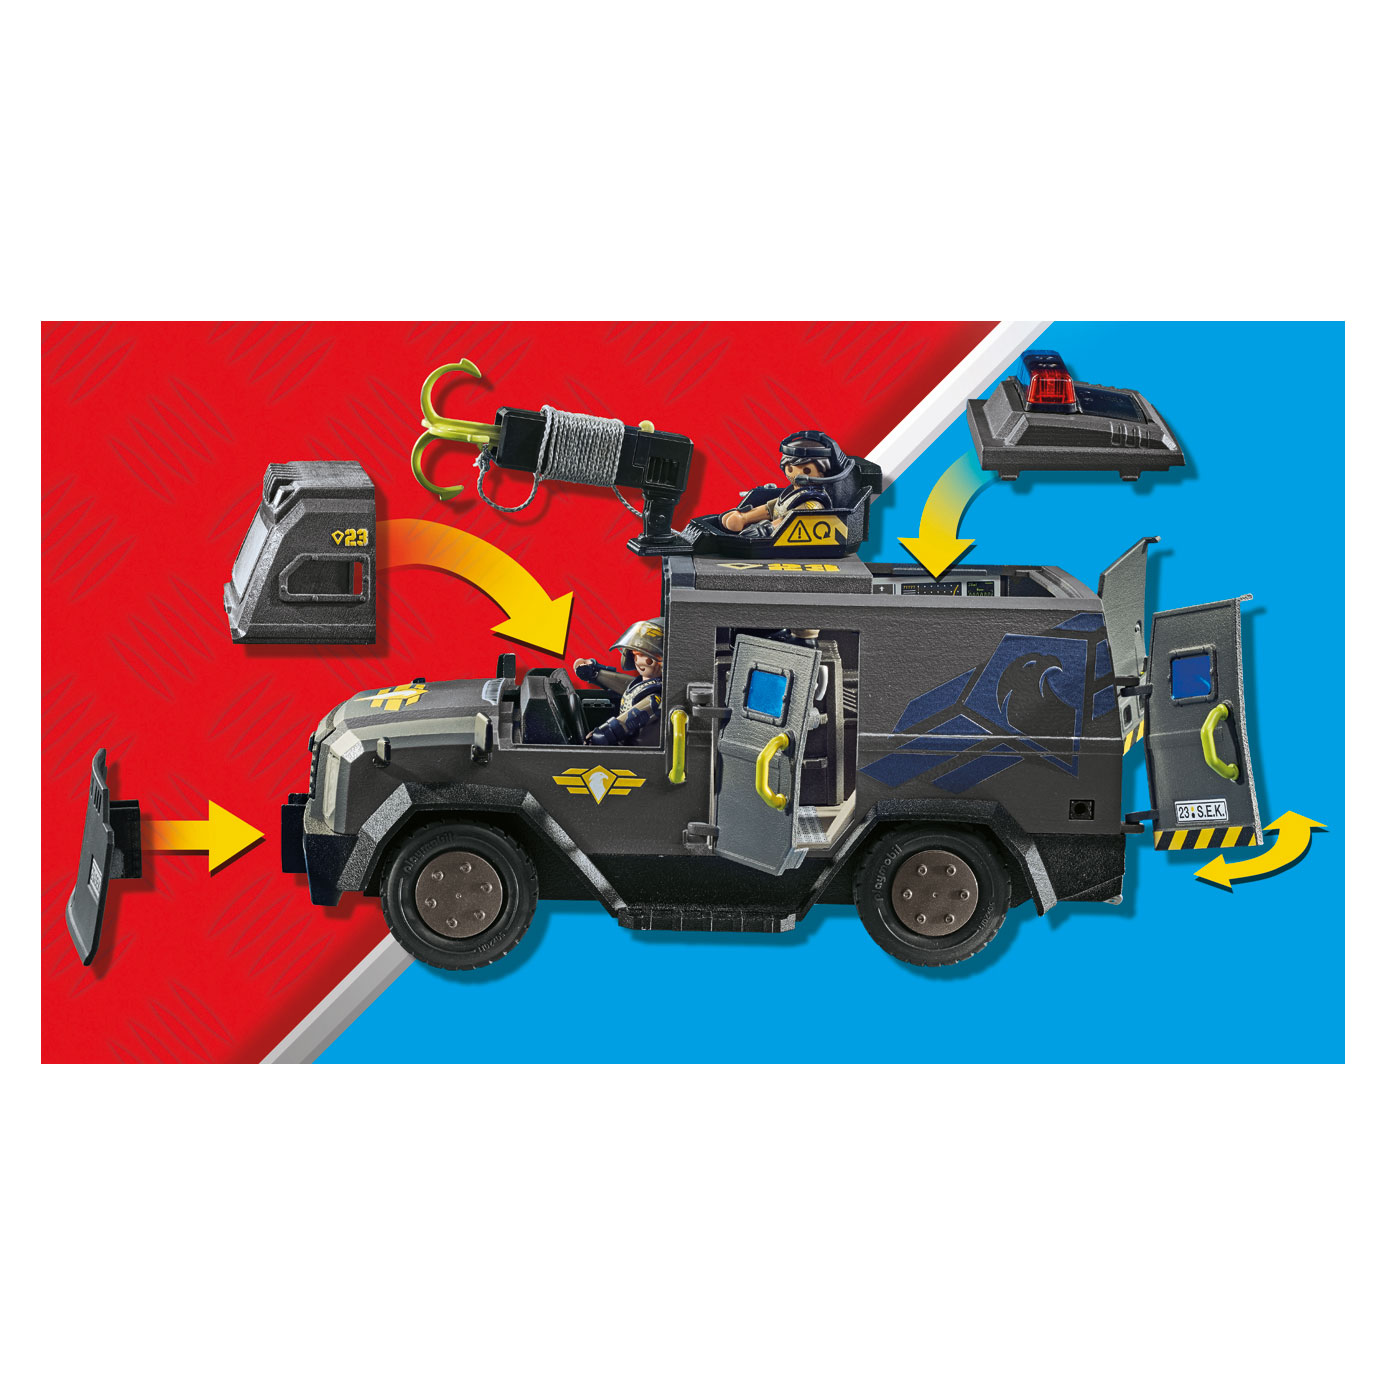 Playmobil · Playmobil City Action SE-terreinwagen - 71144 (Toys)